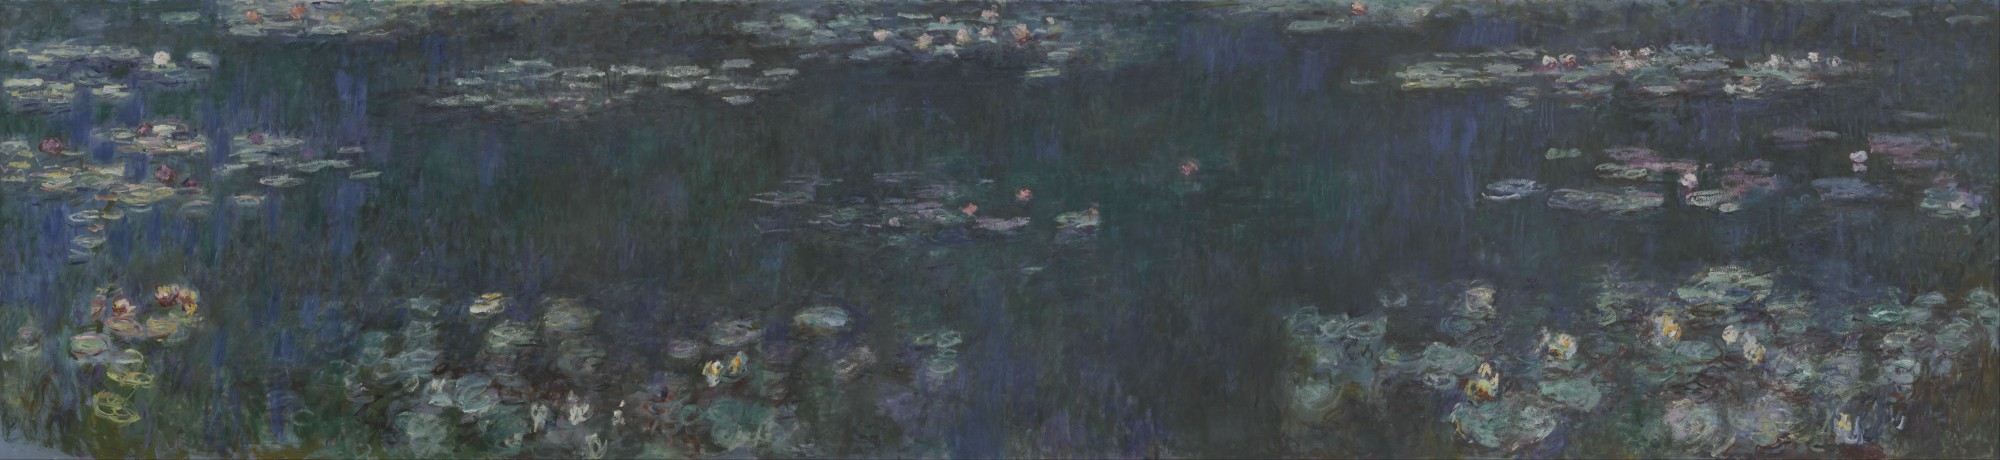 Claude Monet - The Water Lilies - Green Reflections - Google Art Project